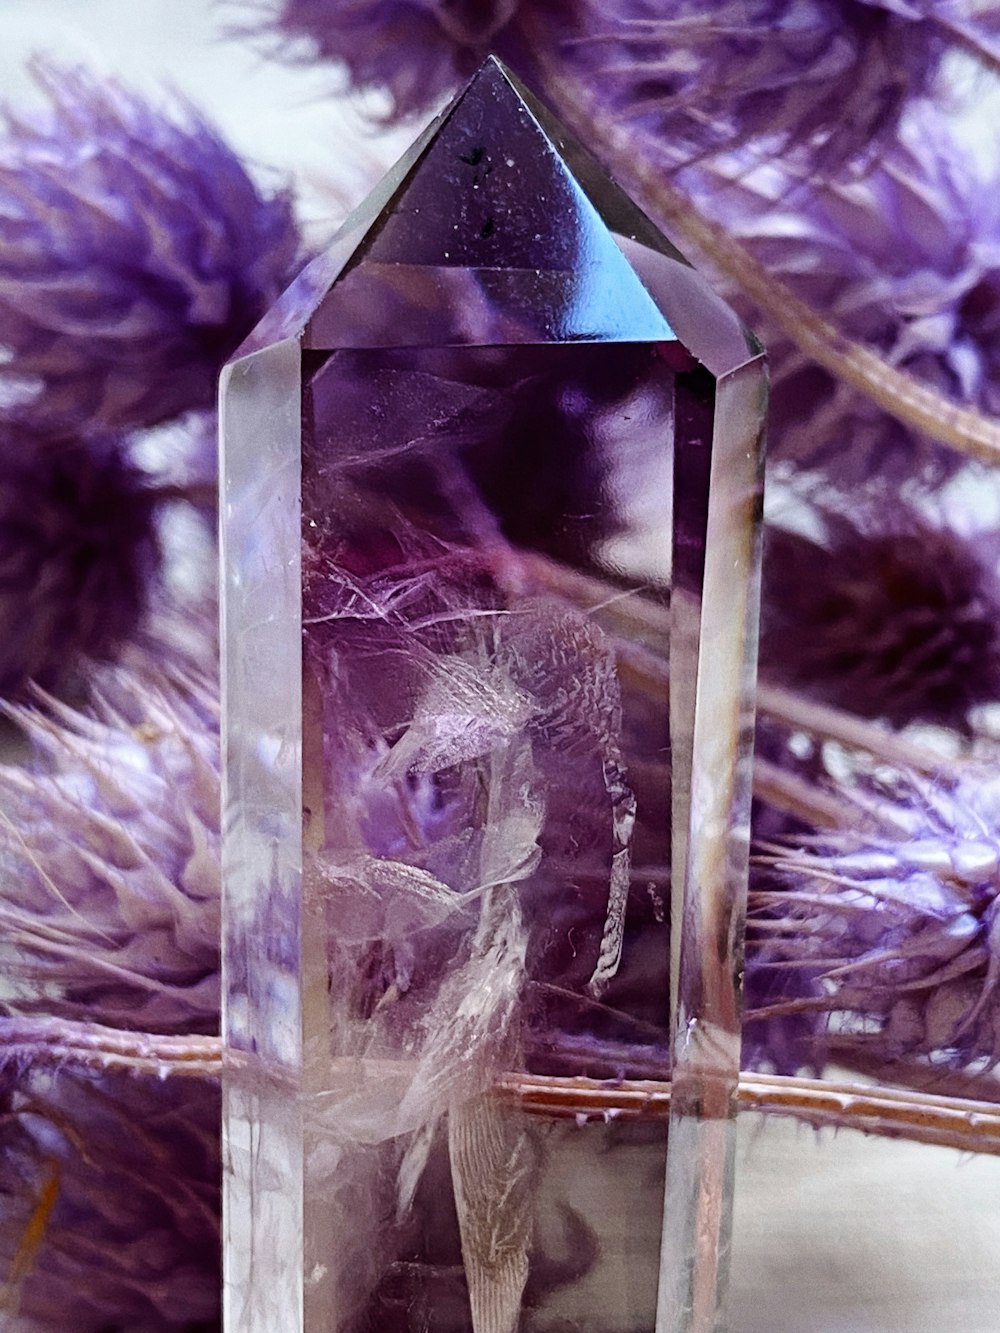 un cristal púrpura con una figura dentro de él